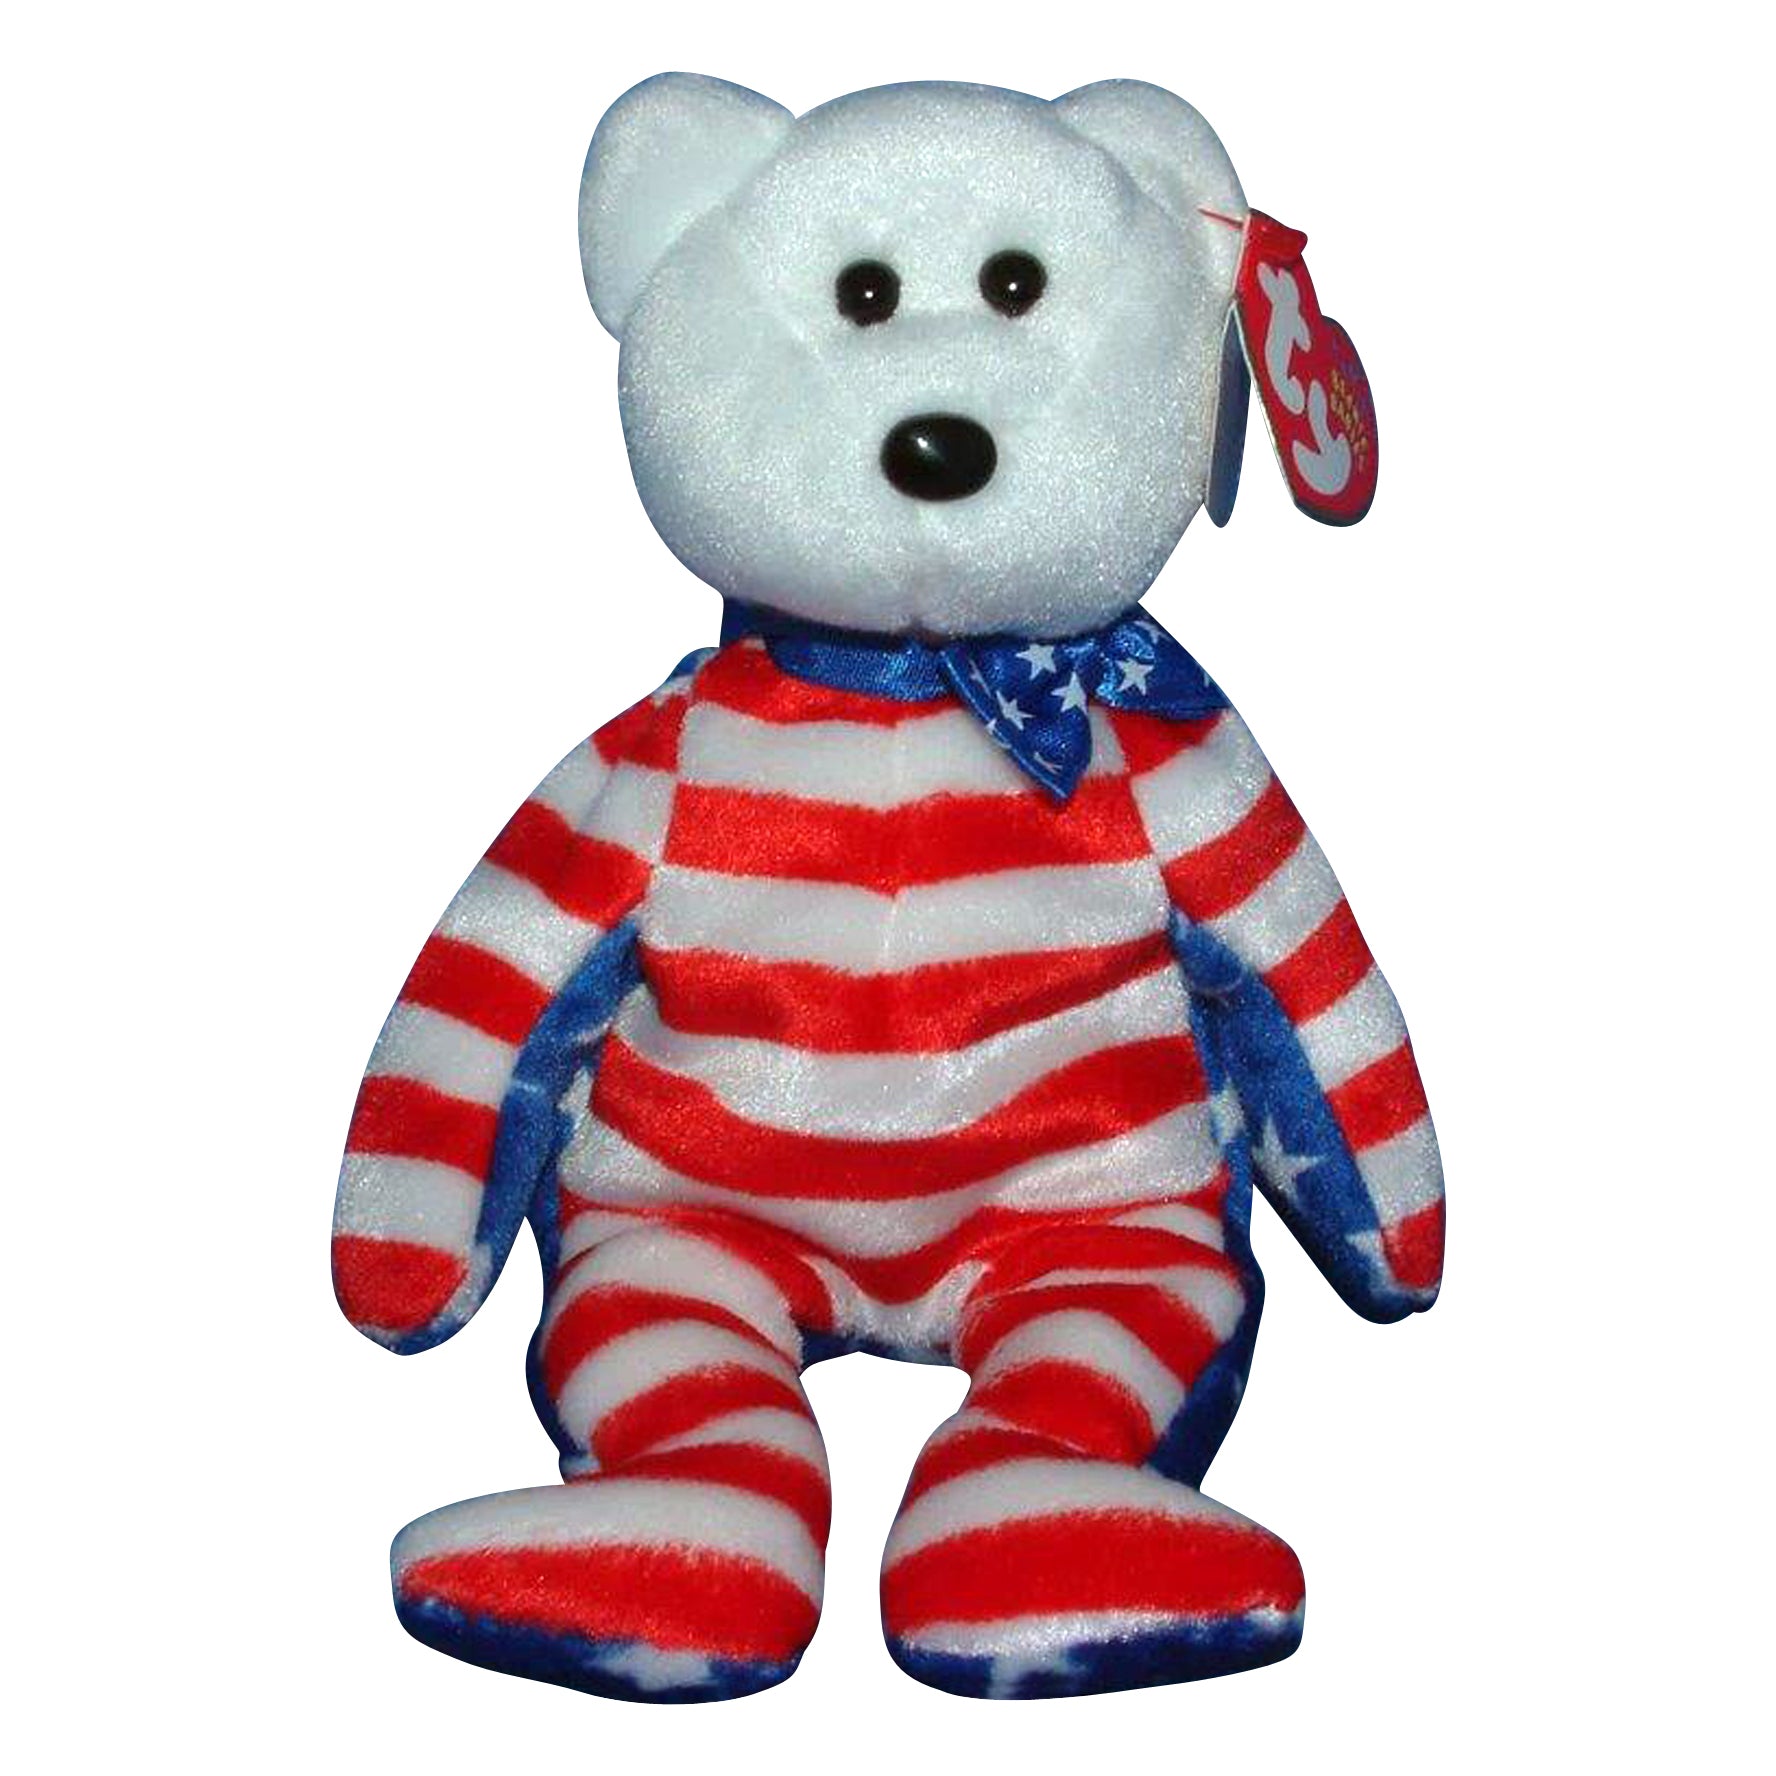 Ty Beanie Baby: Liberty the Bear - White